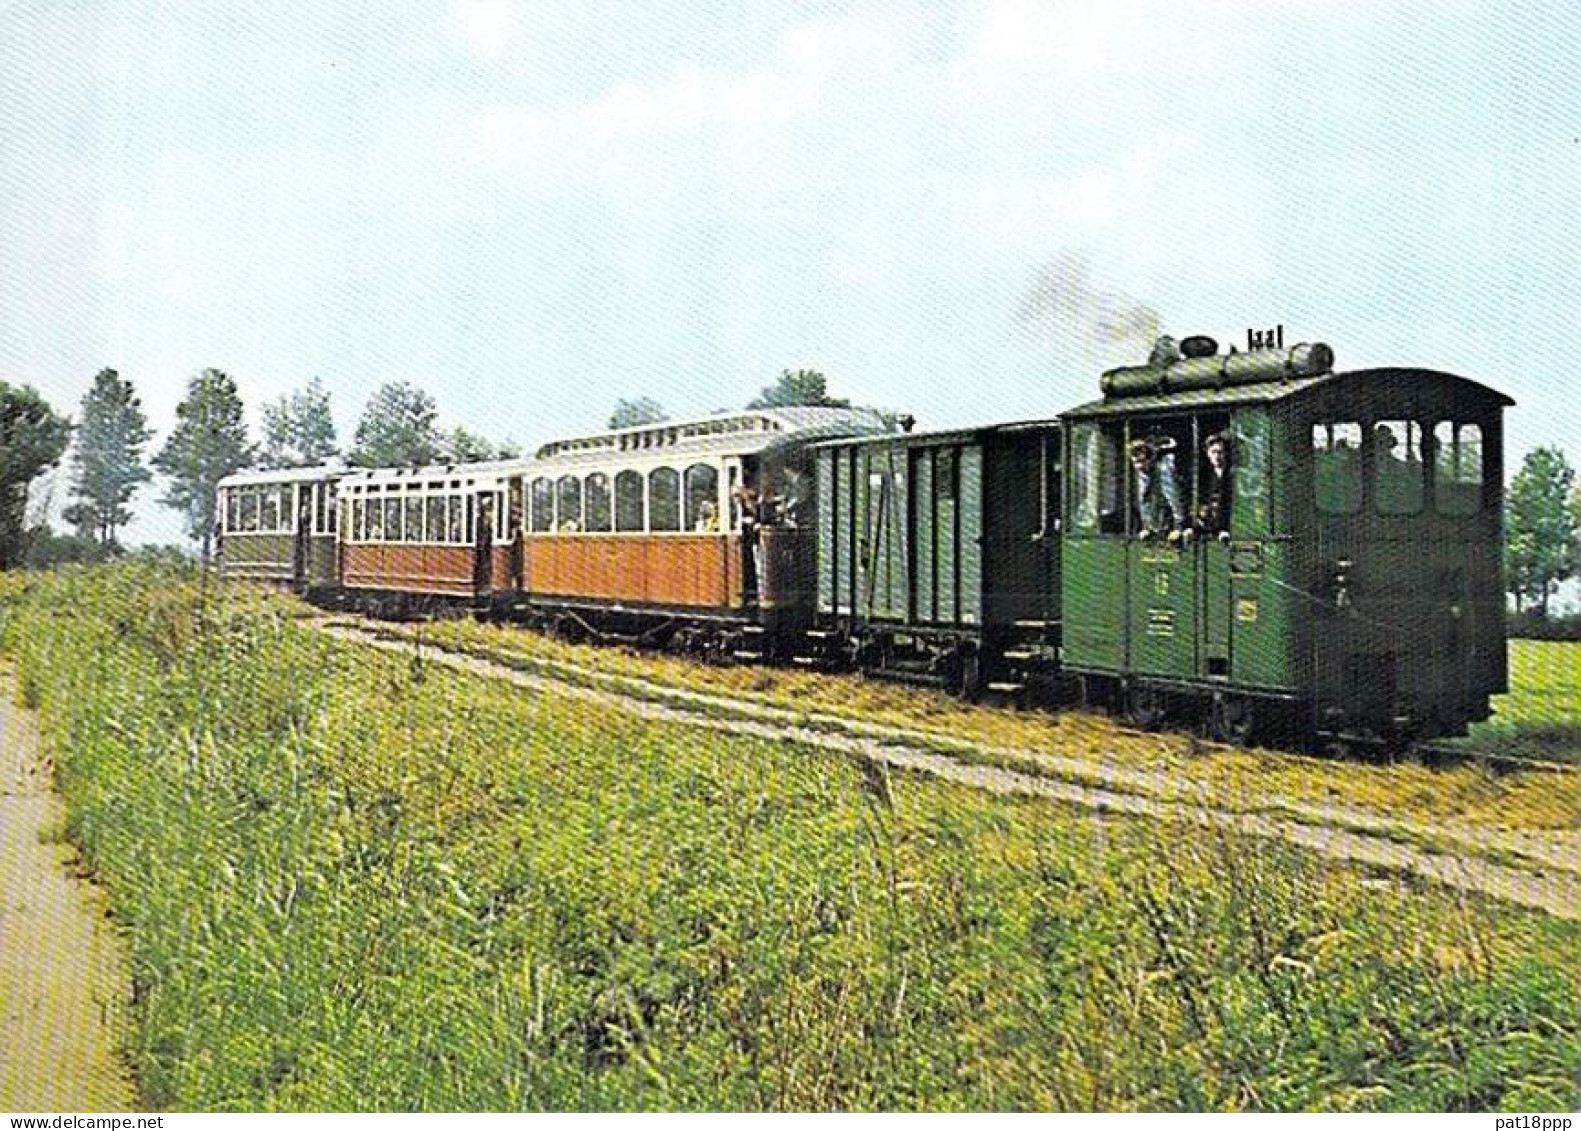 MONDE  Lot de 17 cartes - TRAINS (4 CPSM PF13 CPSM GF)  - Train zug trenes bahn trein treni trenes